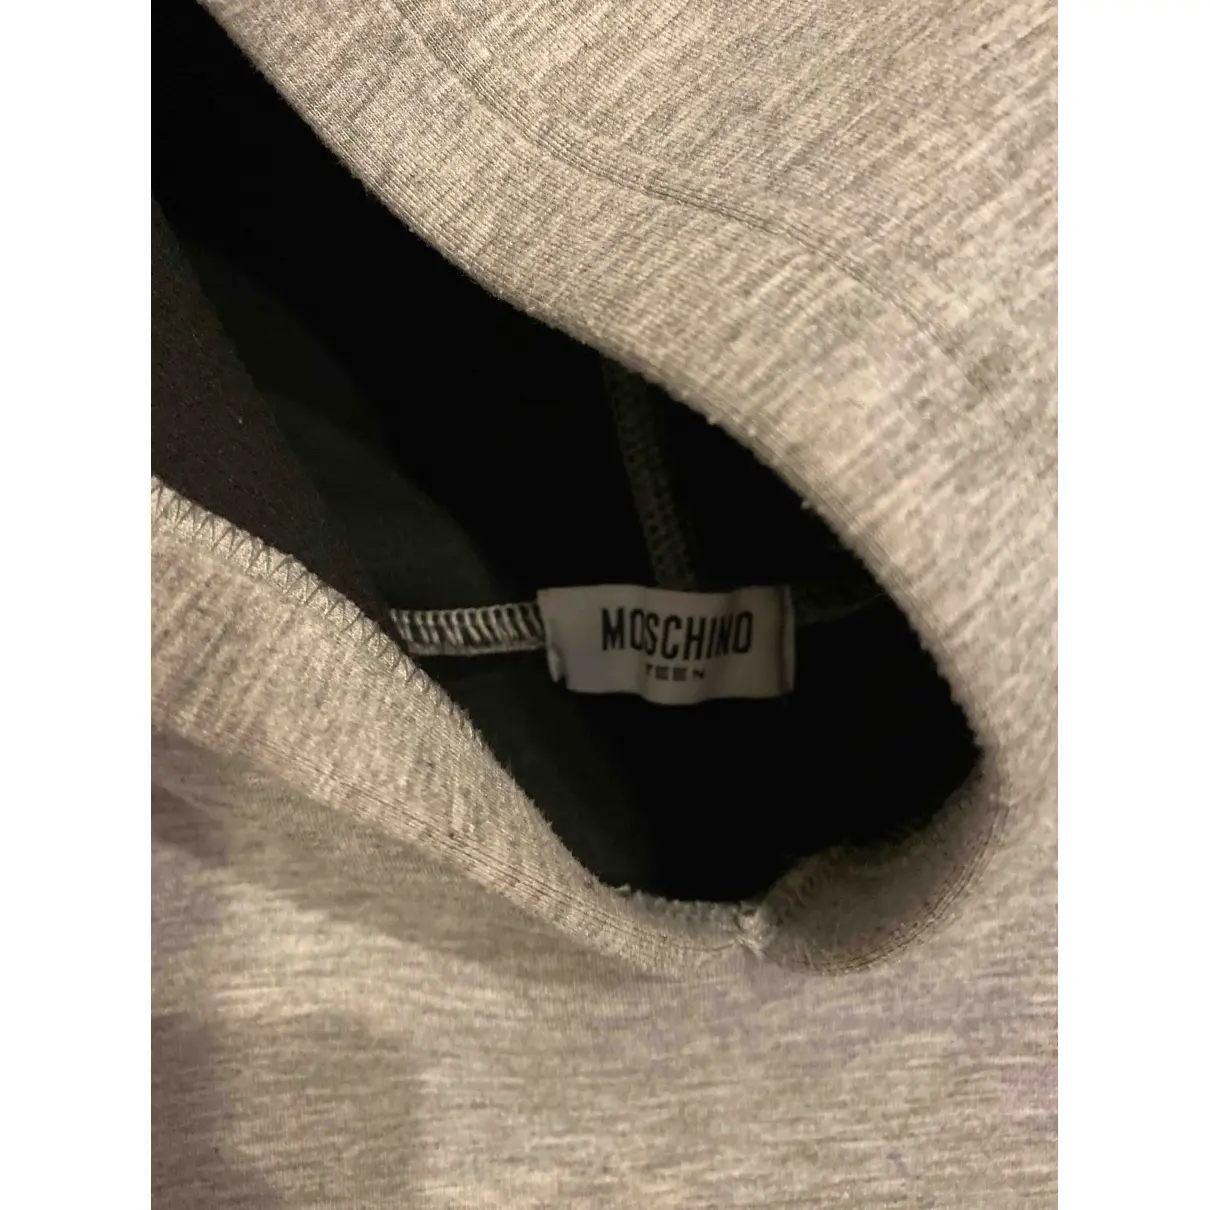 Buy Moschino Grey Polyester Knitwear online